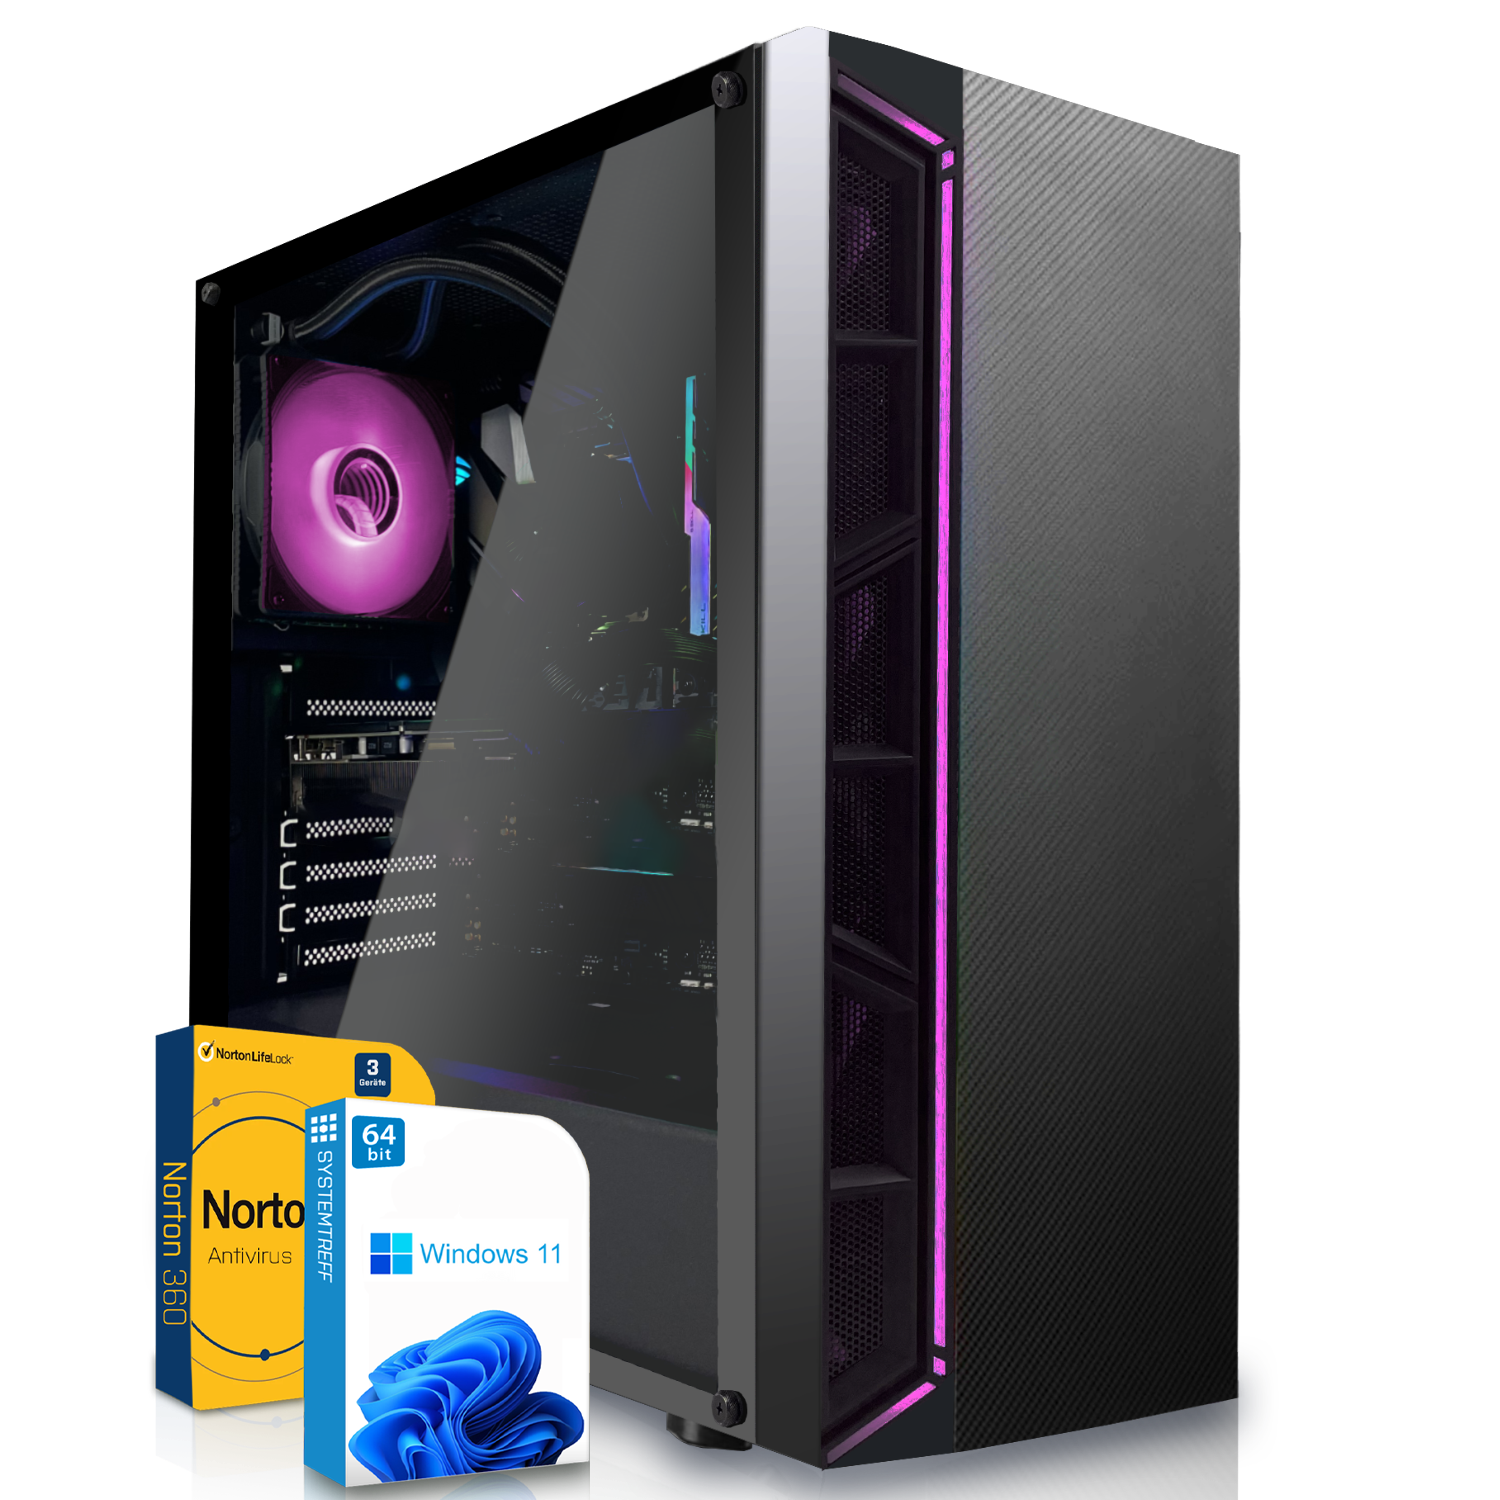 SYSTEMTREFF Gaming AMD Ryzen 5 11 GB Ryzen™ RAM, GB 5 Windows PC Pro, 16 mit 0 GB, 1650 Prozessor, mSSD, 512 GTX NVIDIA GeForce® Gaming 4500, AMD